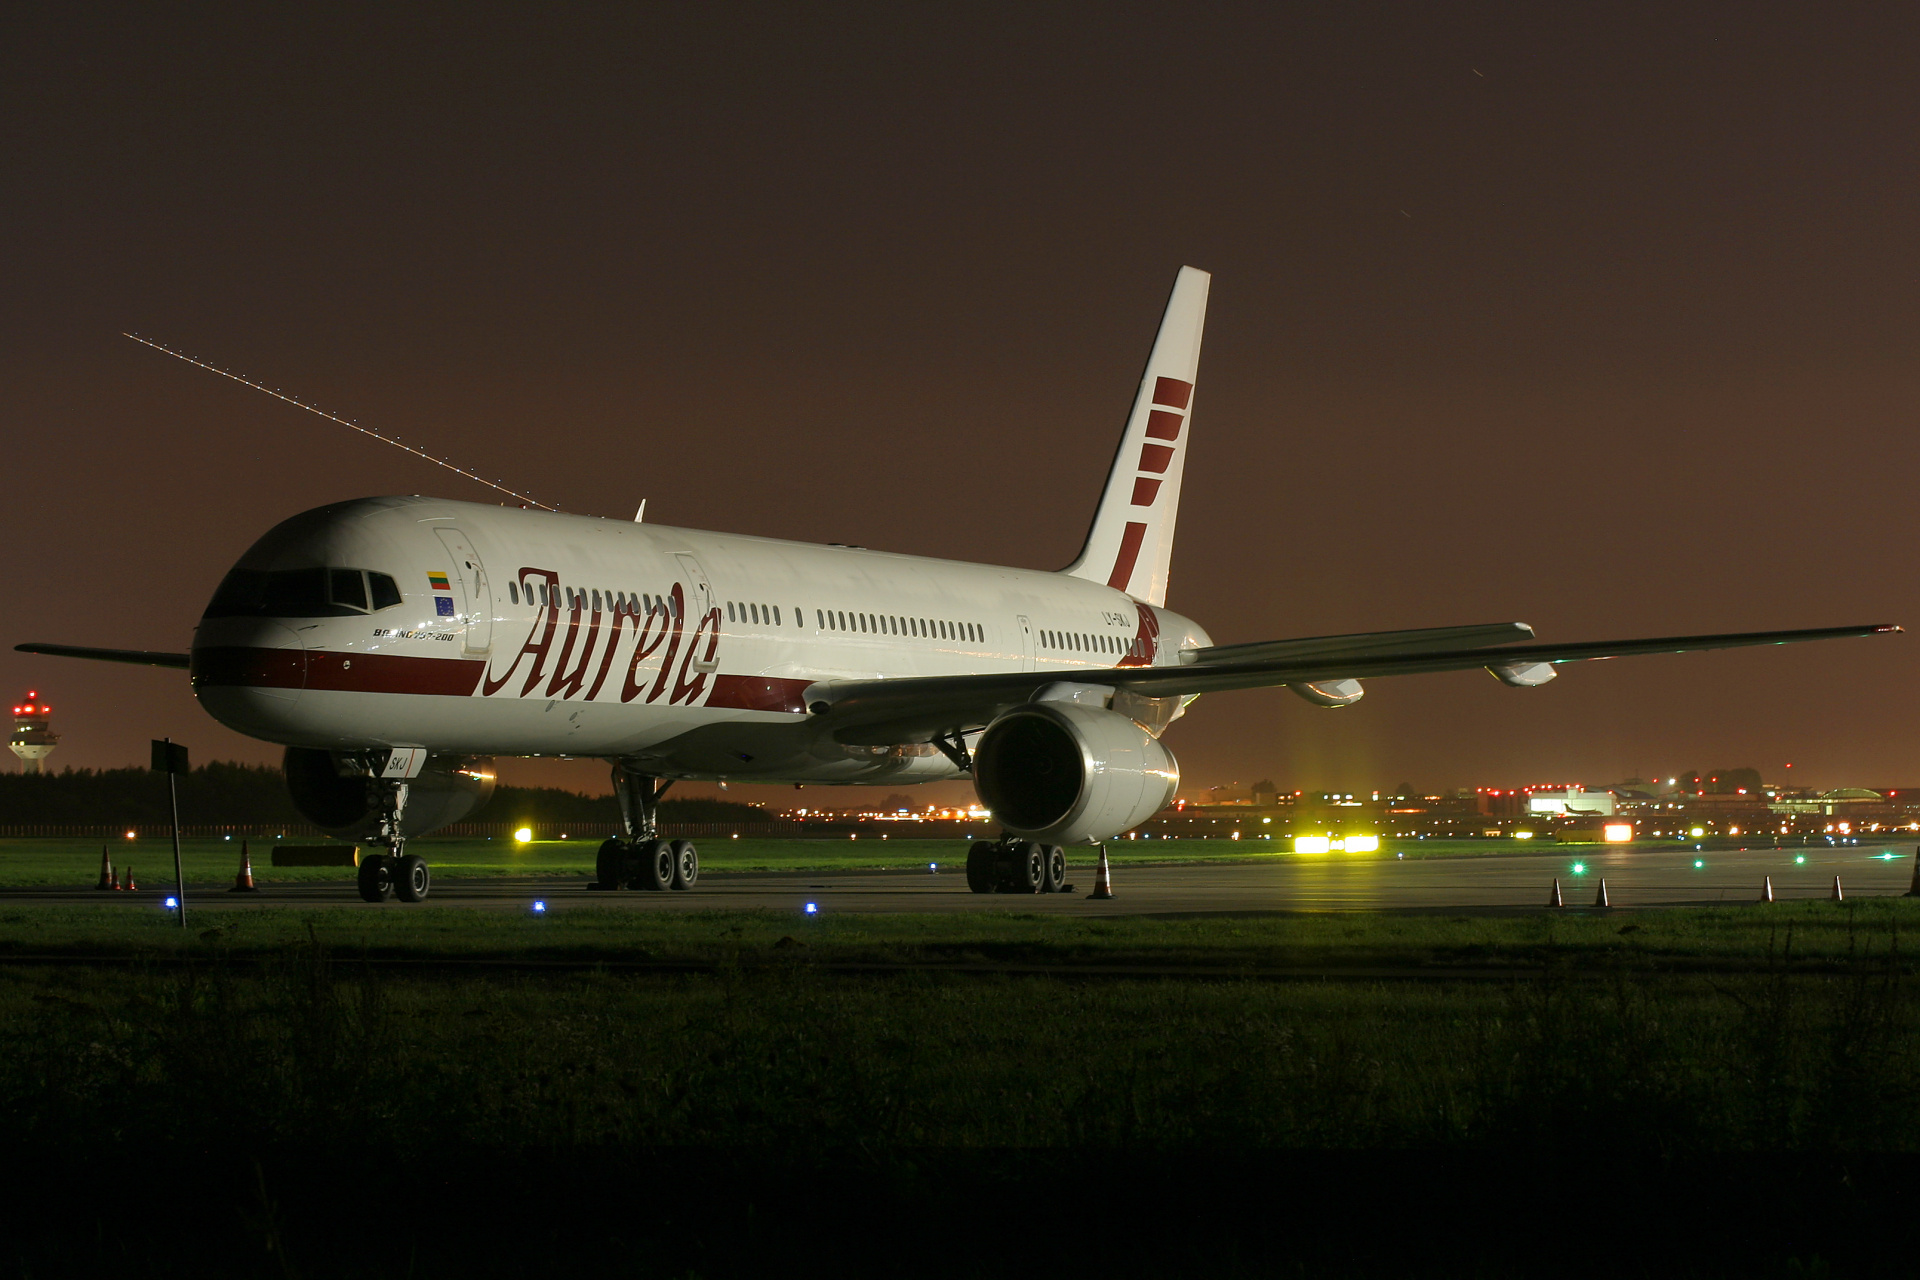 LY-SKJ (Aircraft » EPWA Spotting » Boeing 757-200 » Aurela)